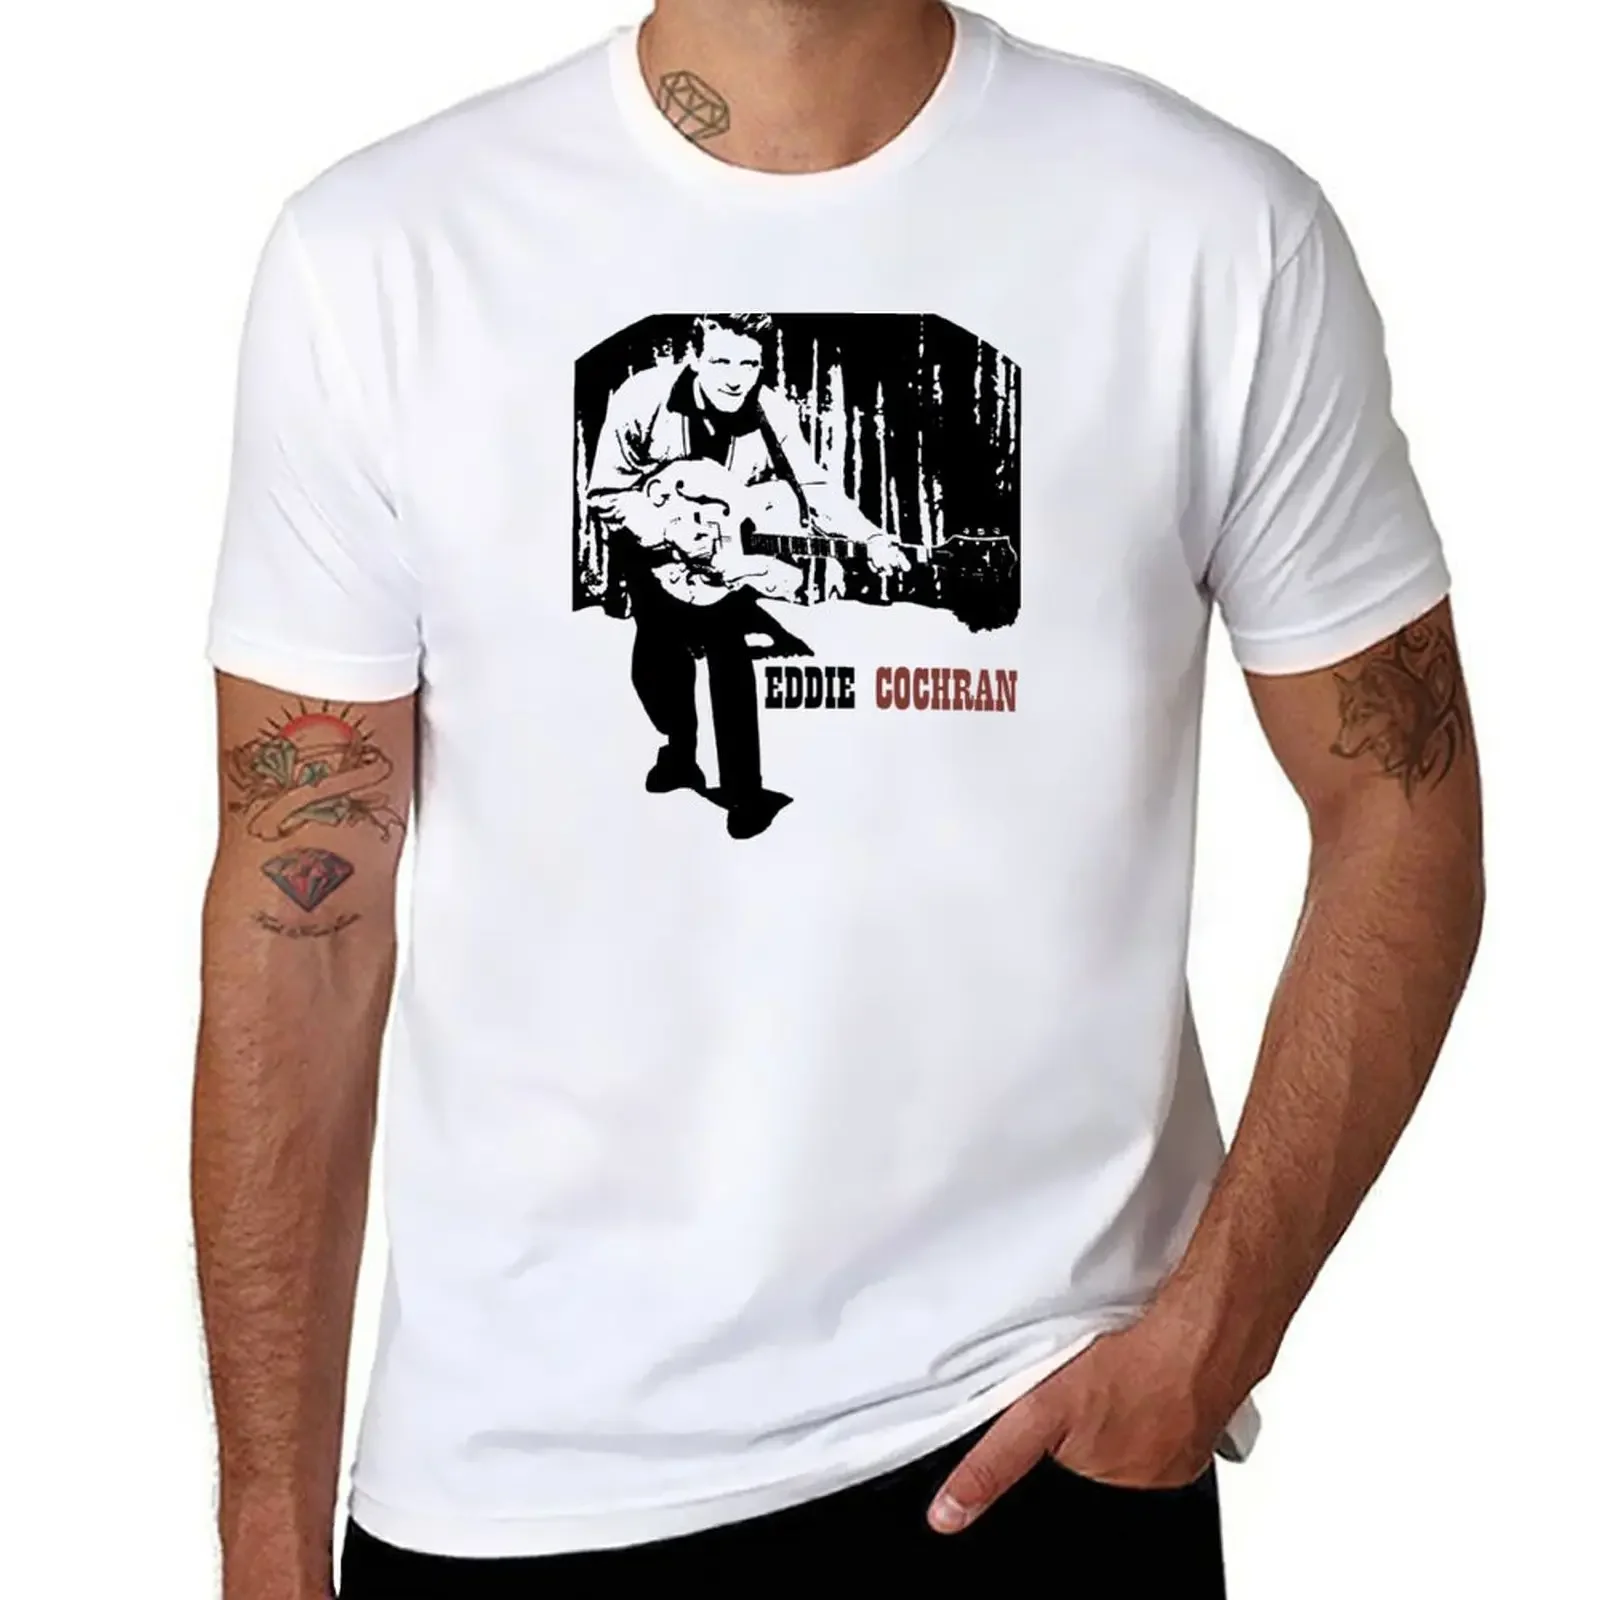 

Eddie Cochran T-Shirt animal prinfor boys oversizeds customs shirts graphic tees mens graphic t-shirts pack